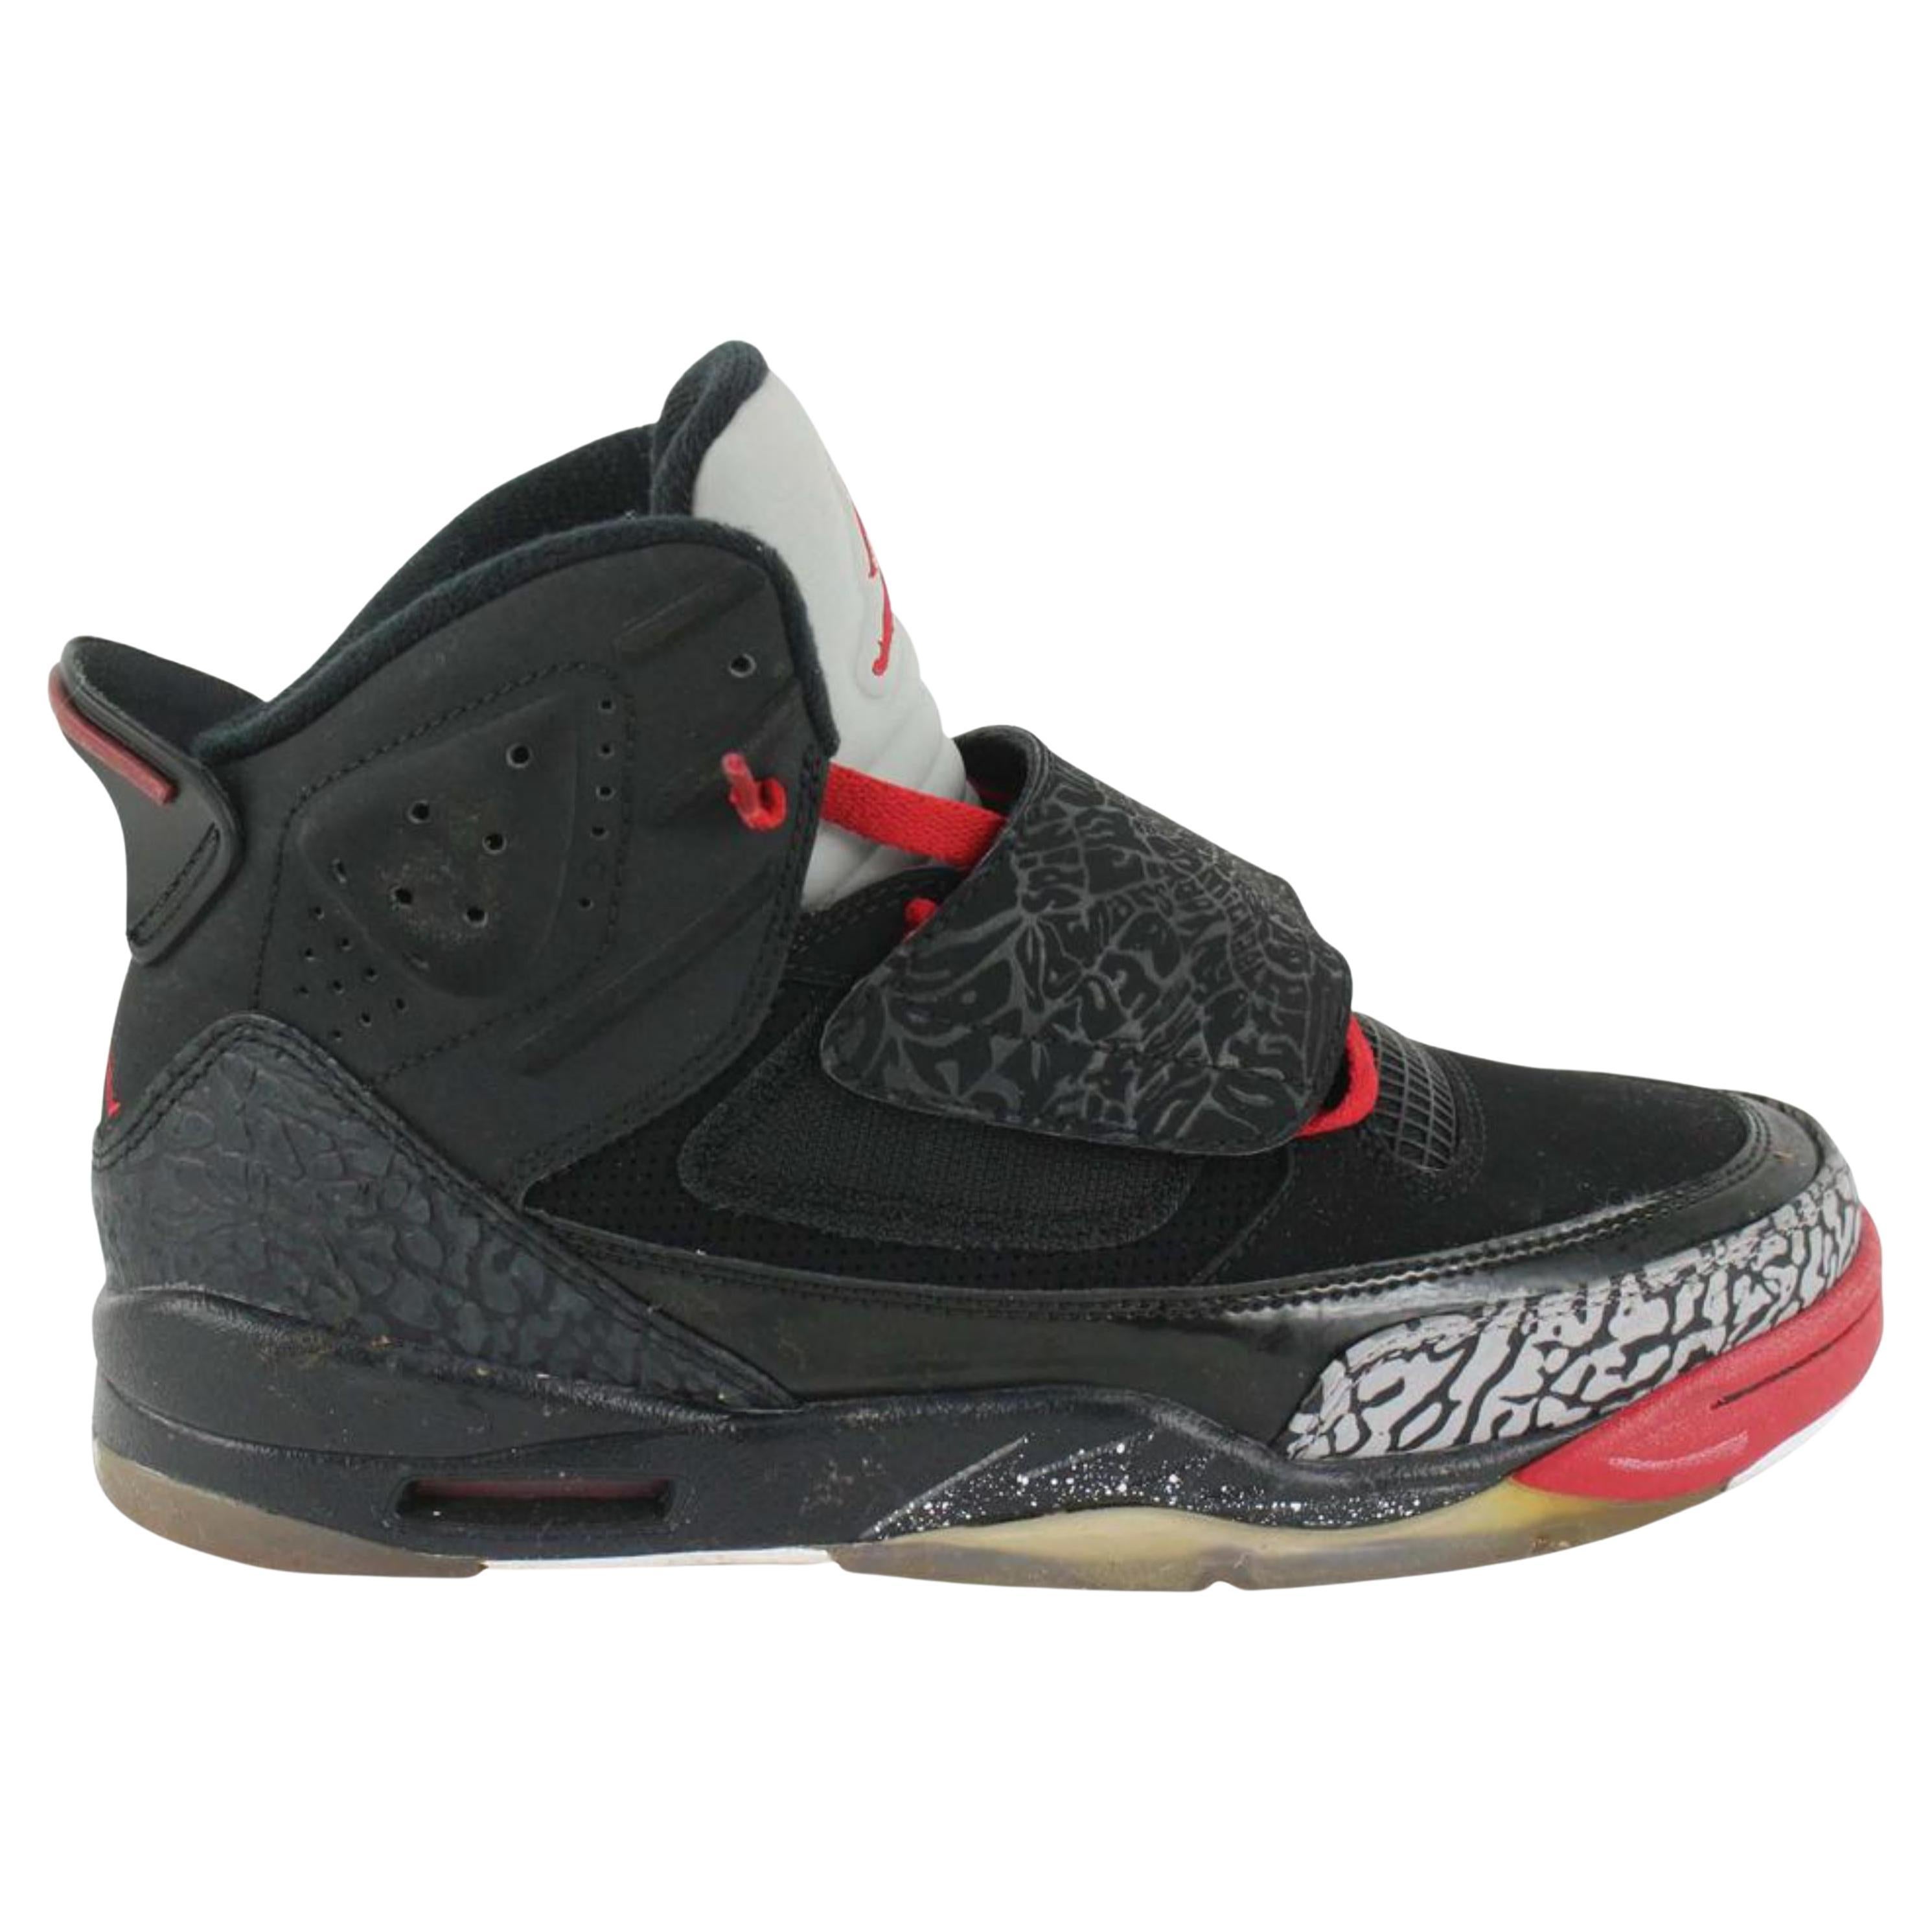 Nike 2012 Youth 7US Cement Black Red Air Jordan Son of Mars 512246-001